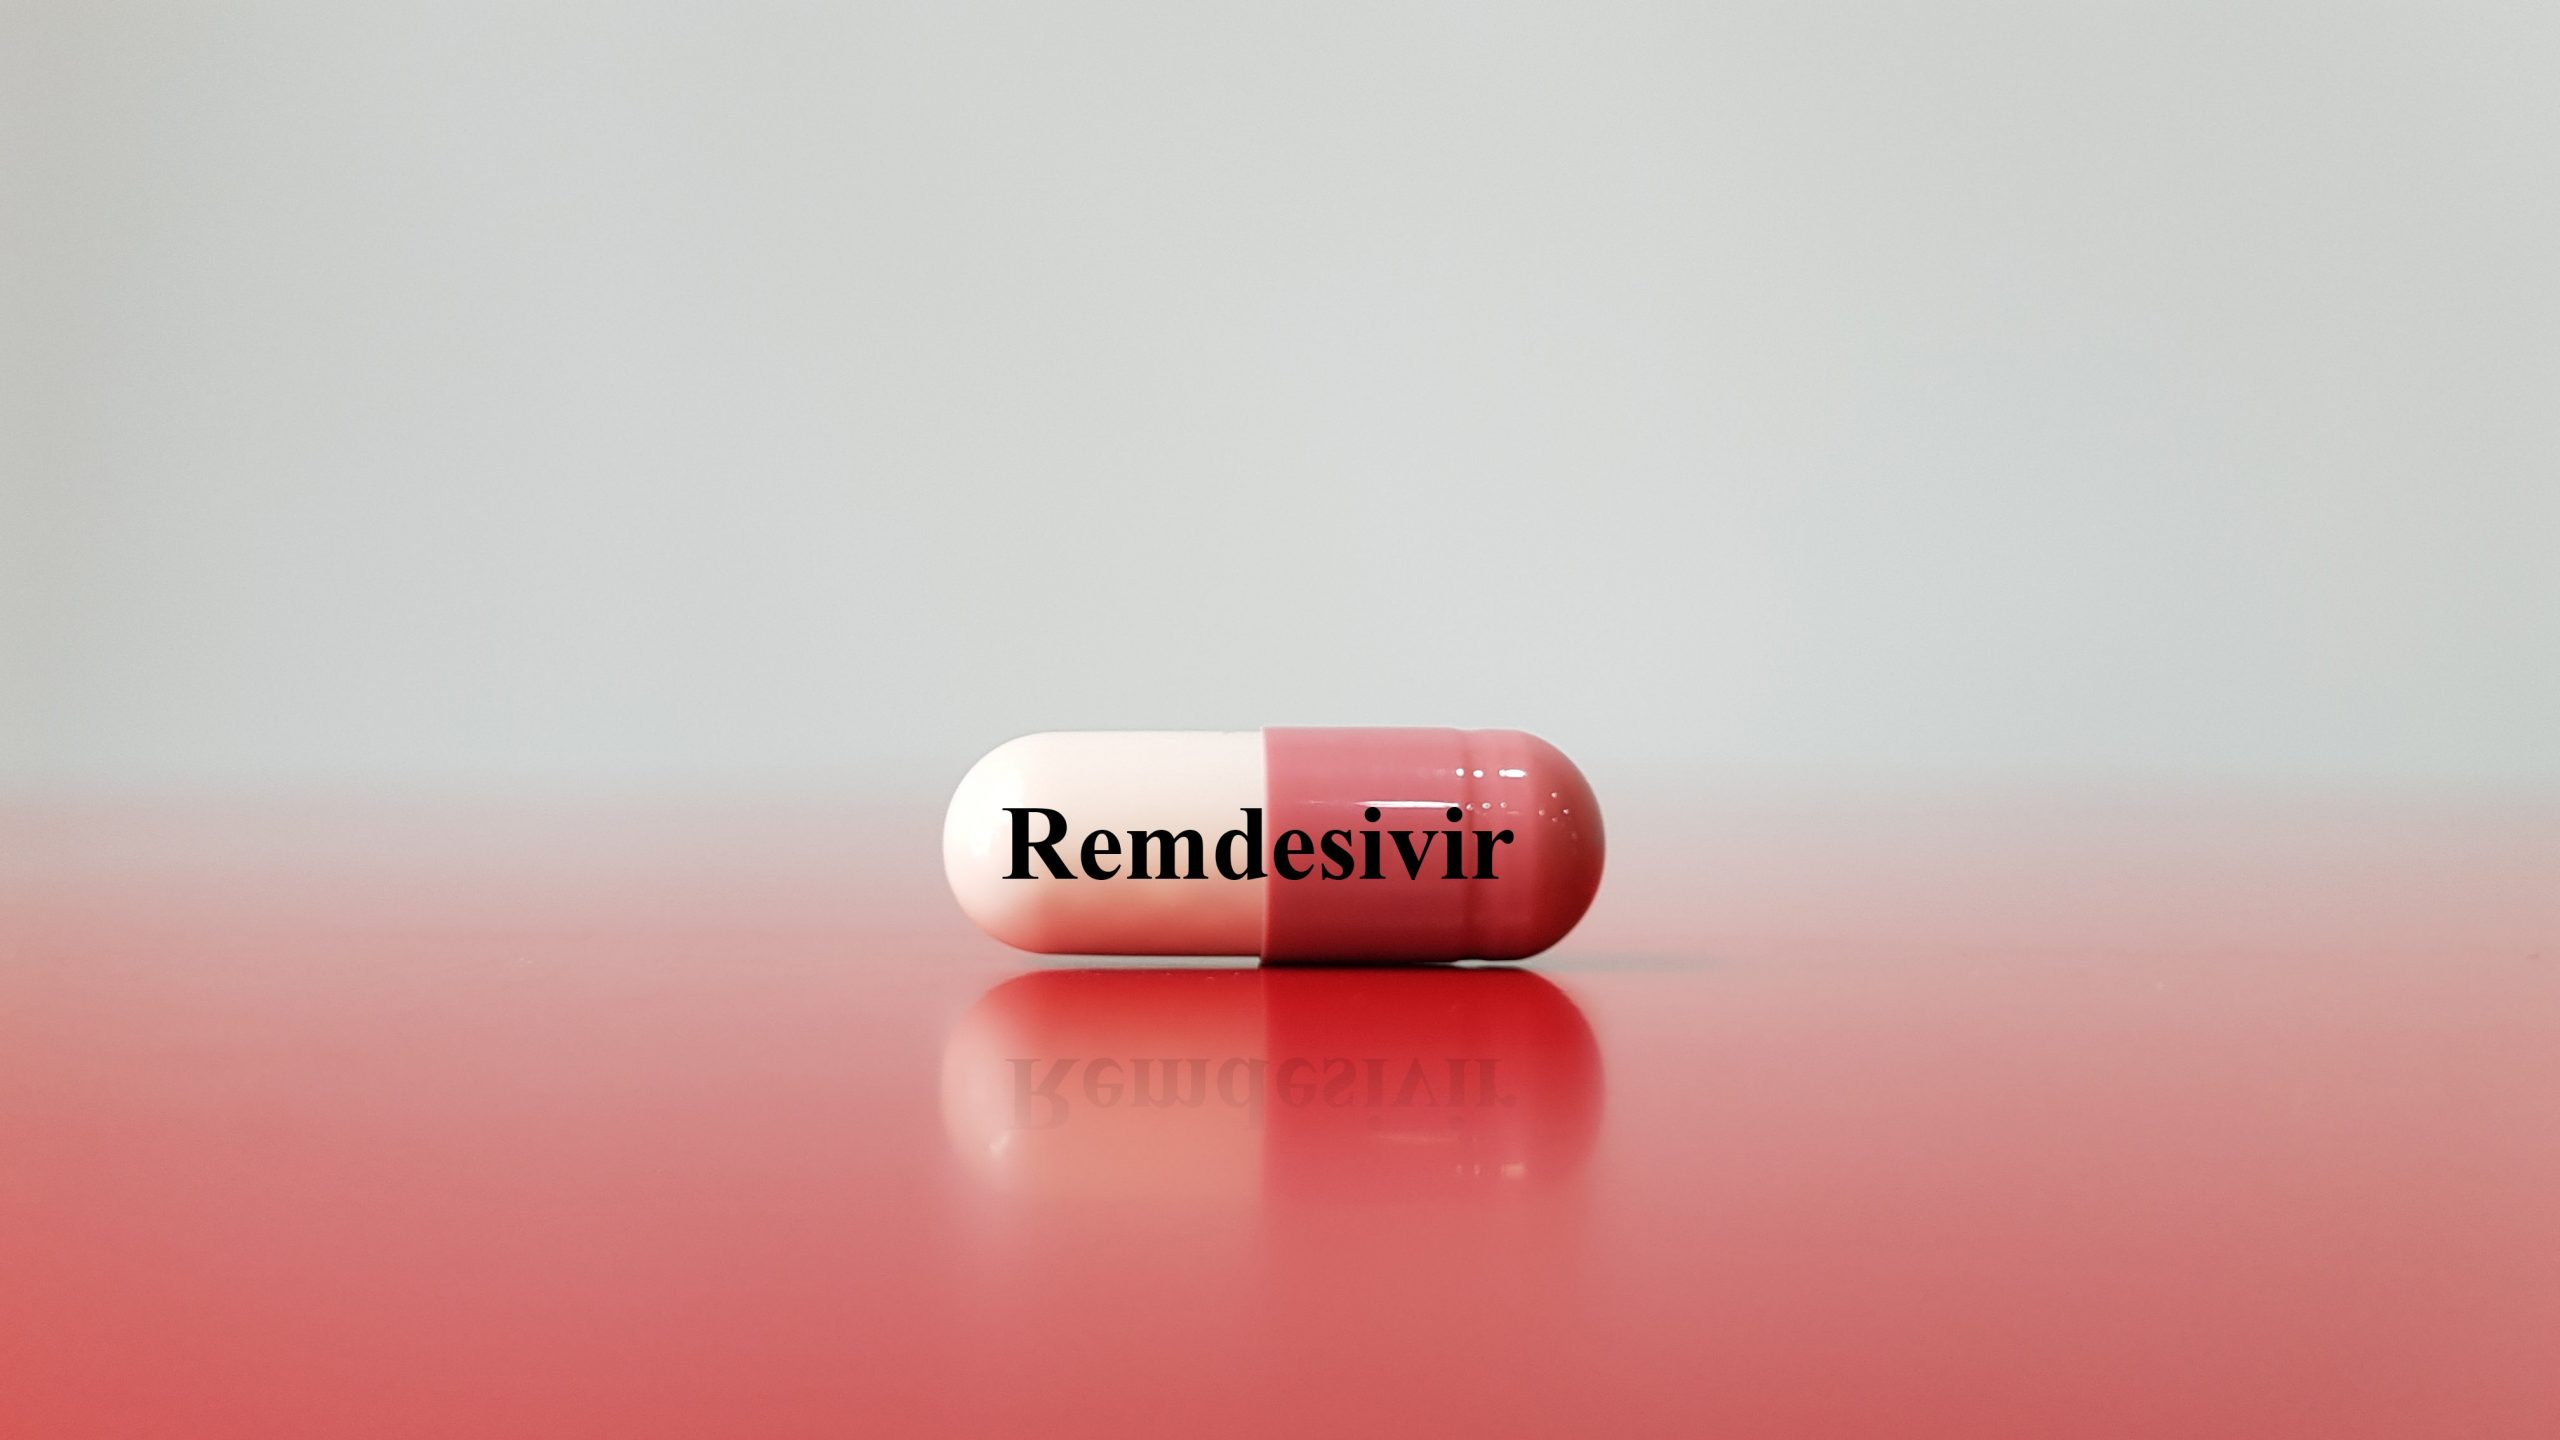 Gigantul farmaceutic american Gilead anunta ca medicamentul Remdesivir are efecte pozitive contraa Covid-19